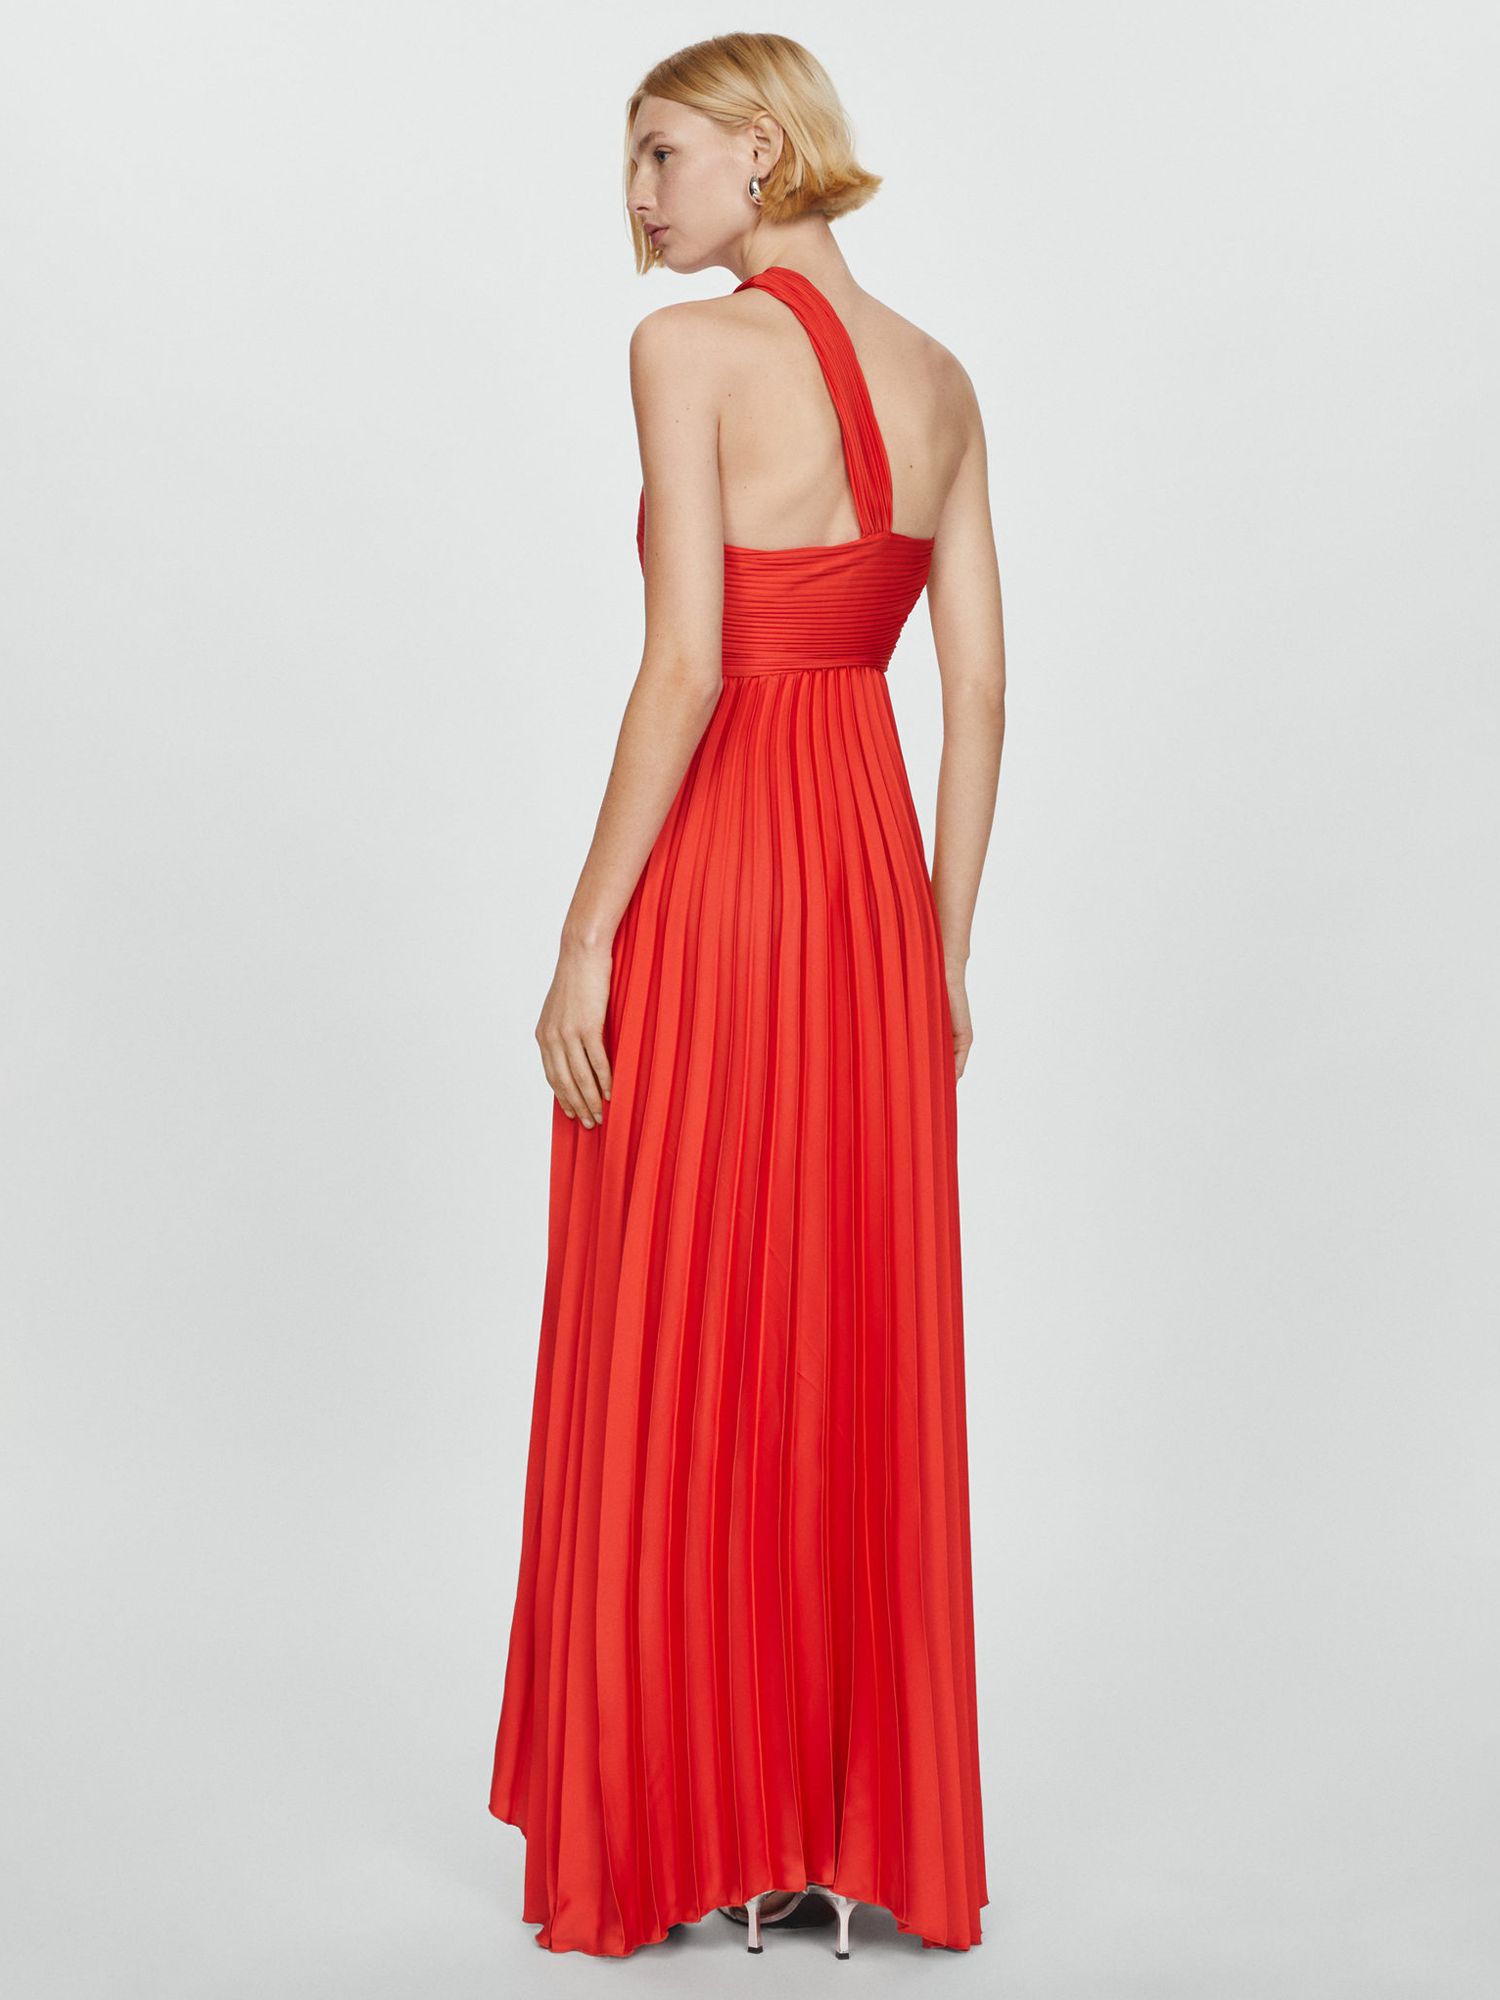 Mango Claudi Pleated One Shoulder Maxi Dress, Red, 10